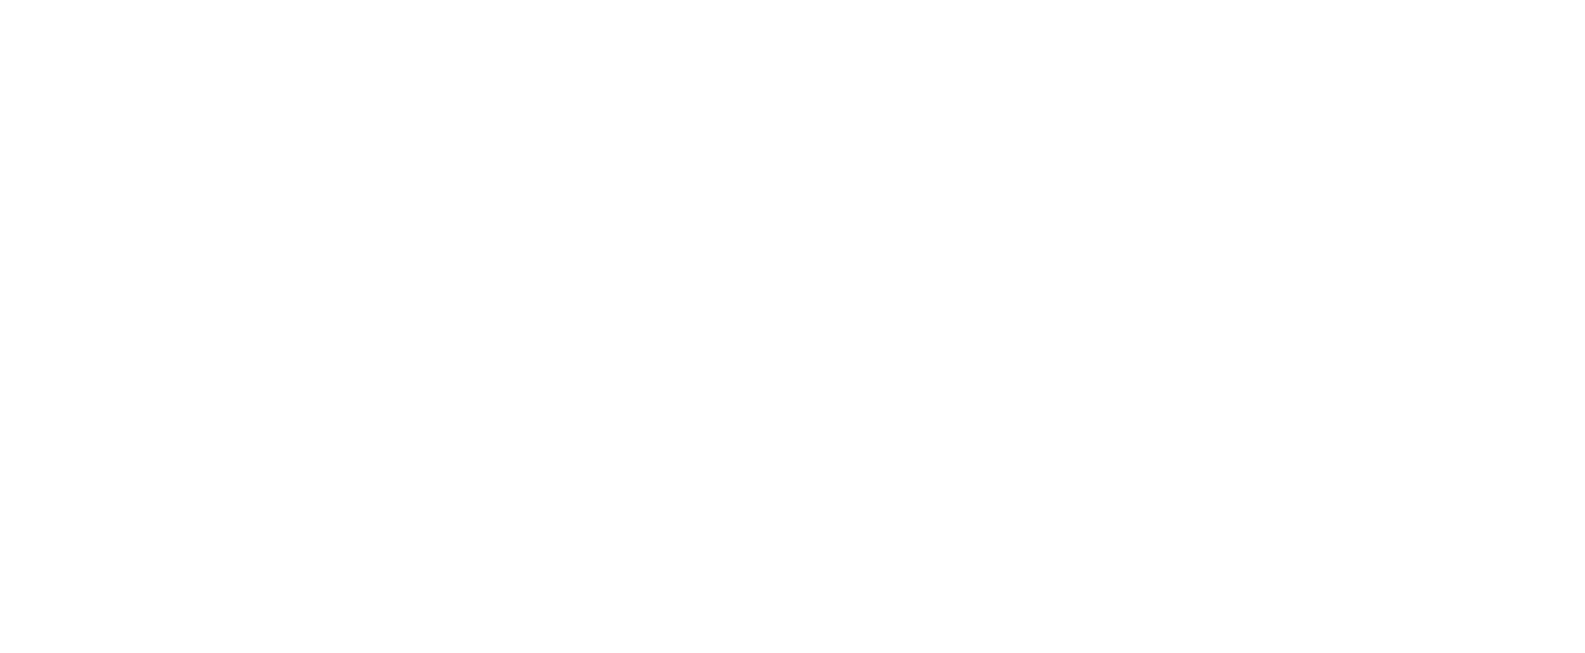 wt-digital-agency-horiz